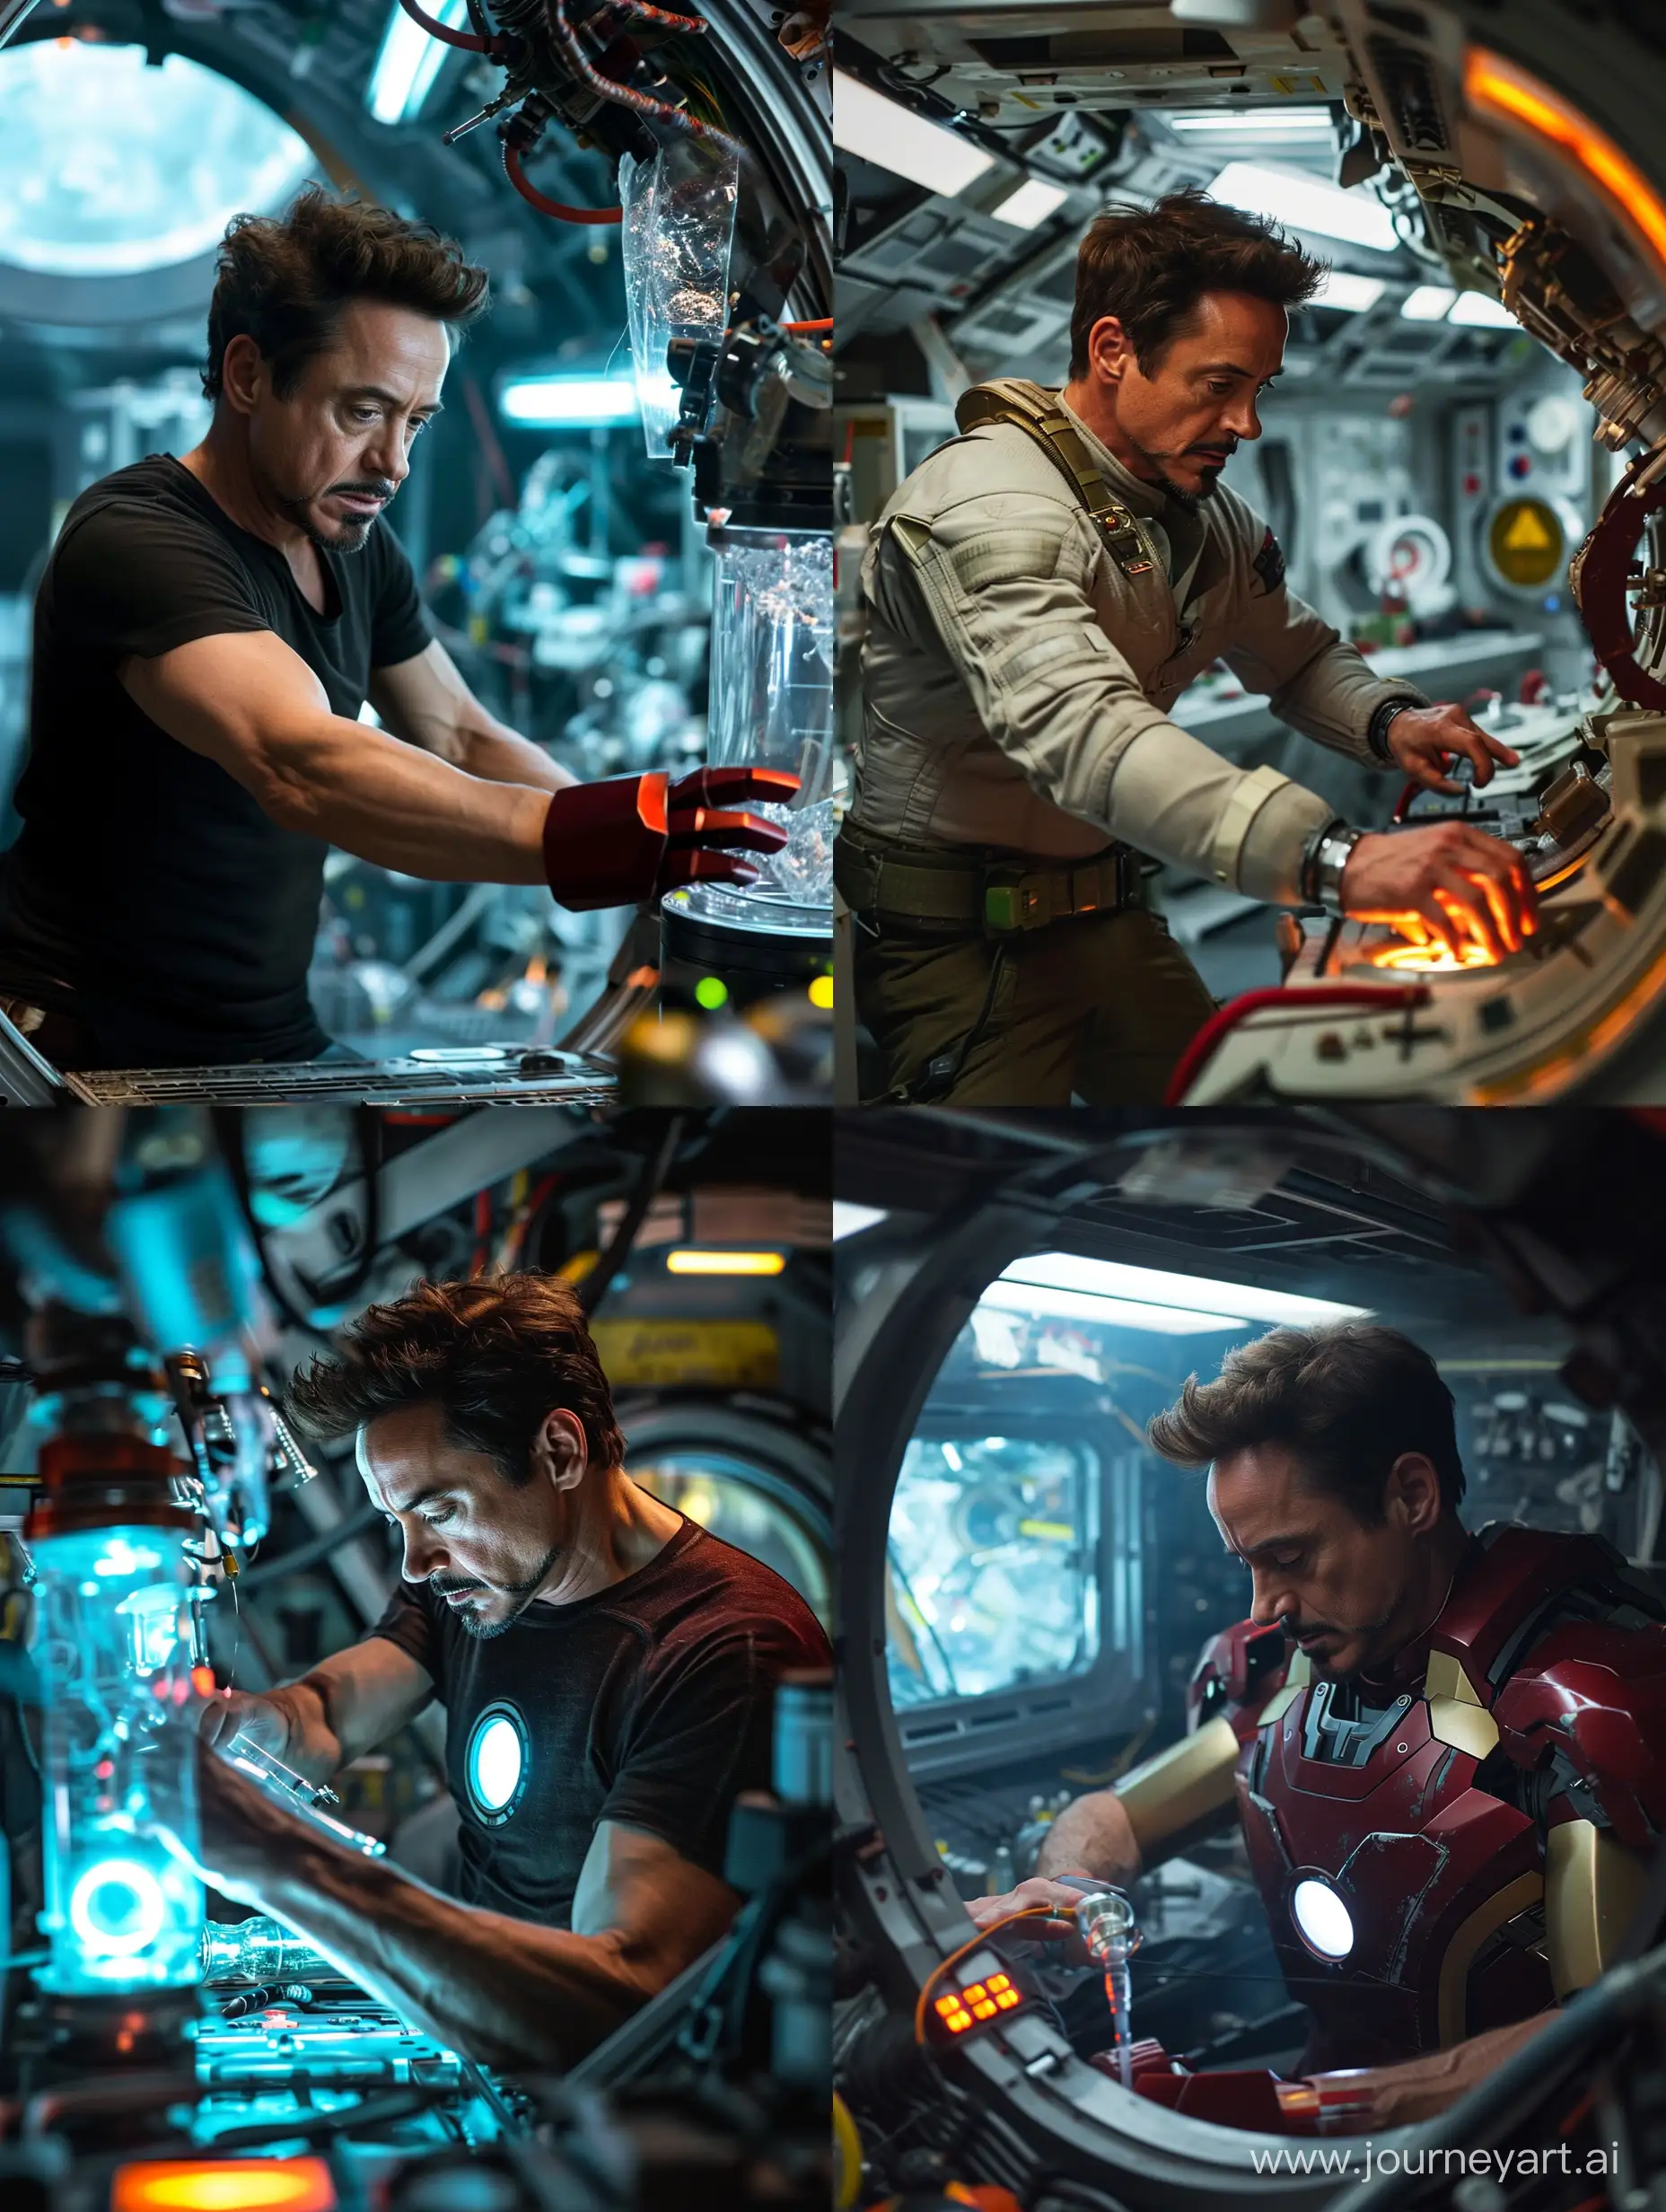 Tony-Stark-Conducting-Experiments-in-Spaceship-Midjourney